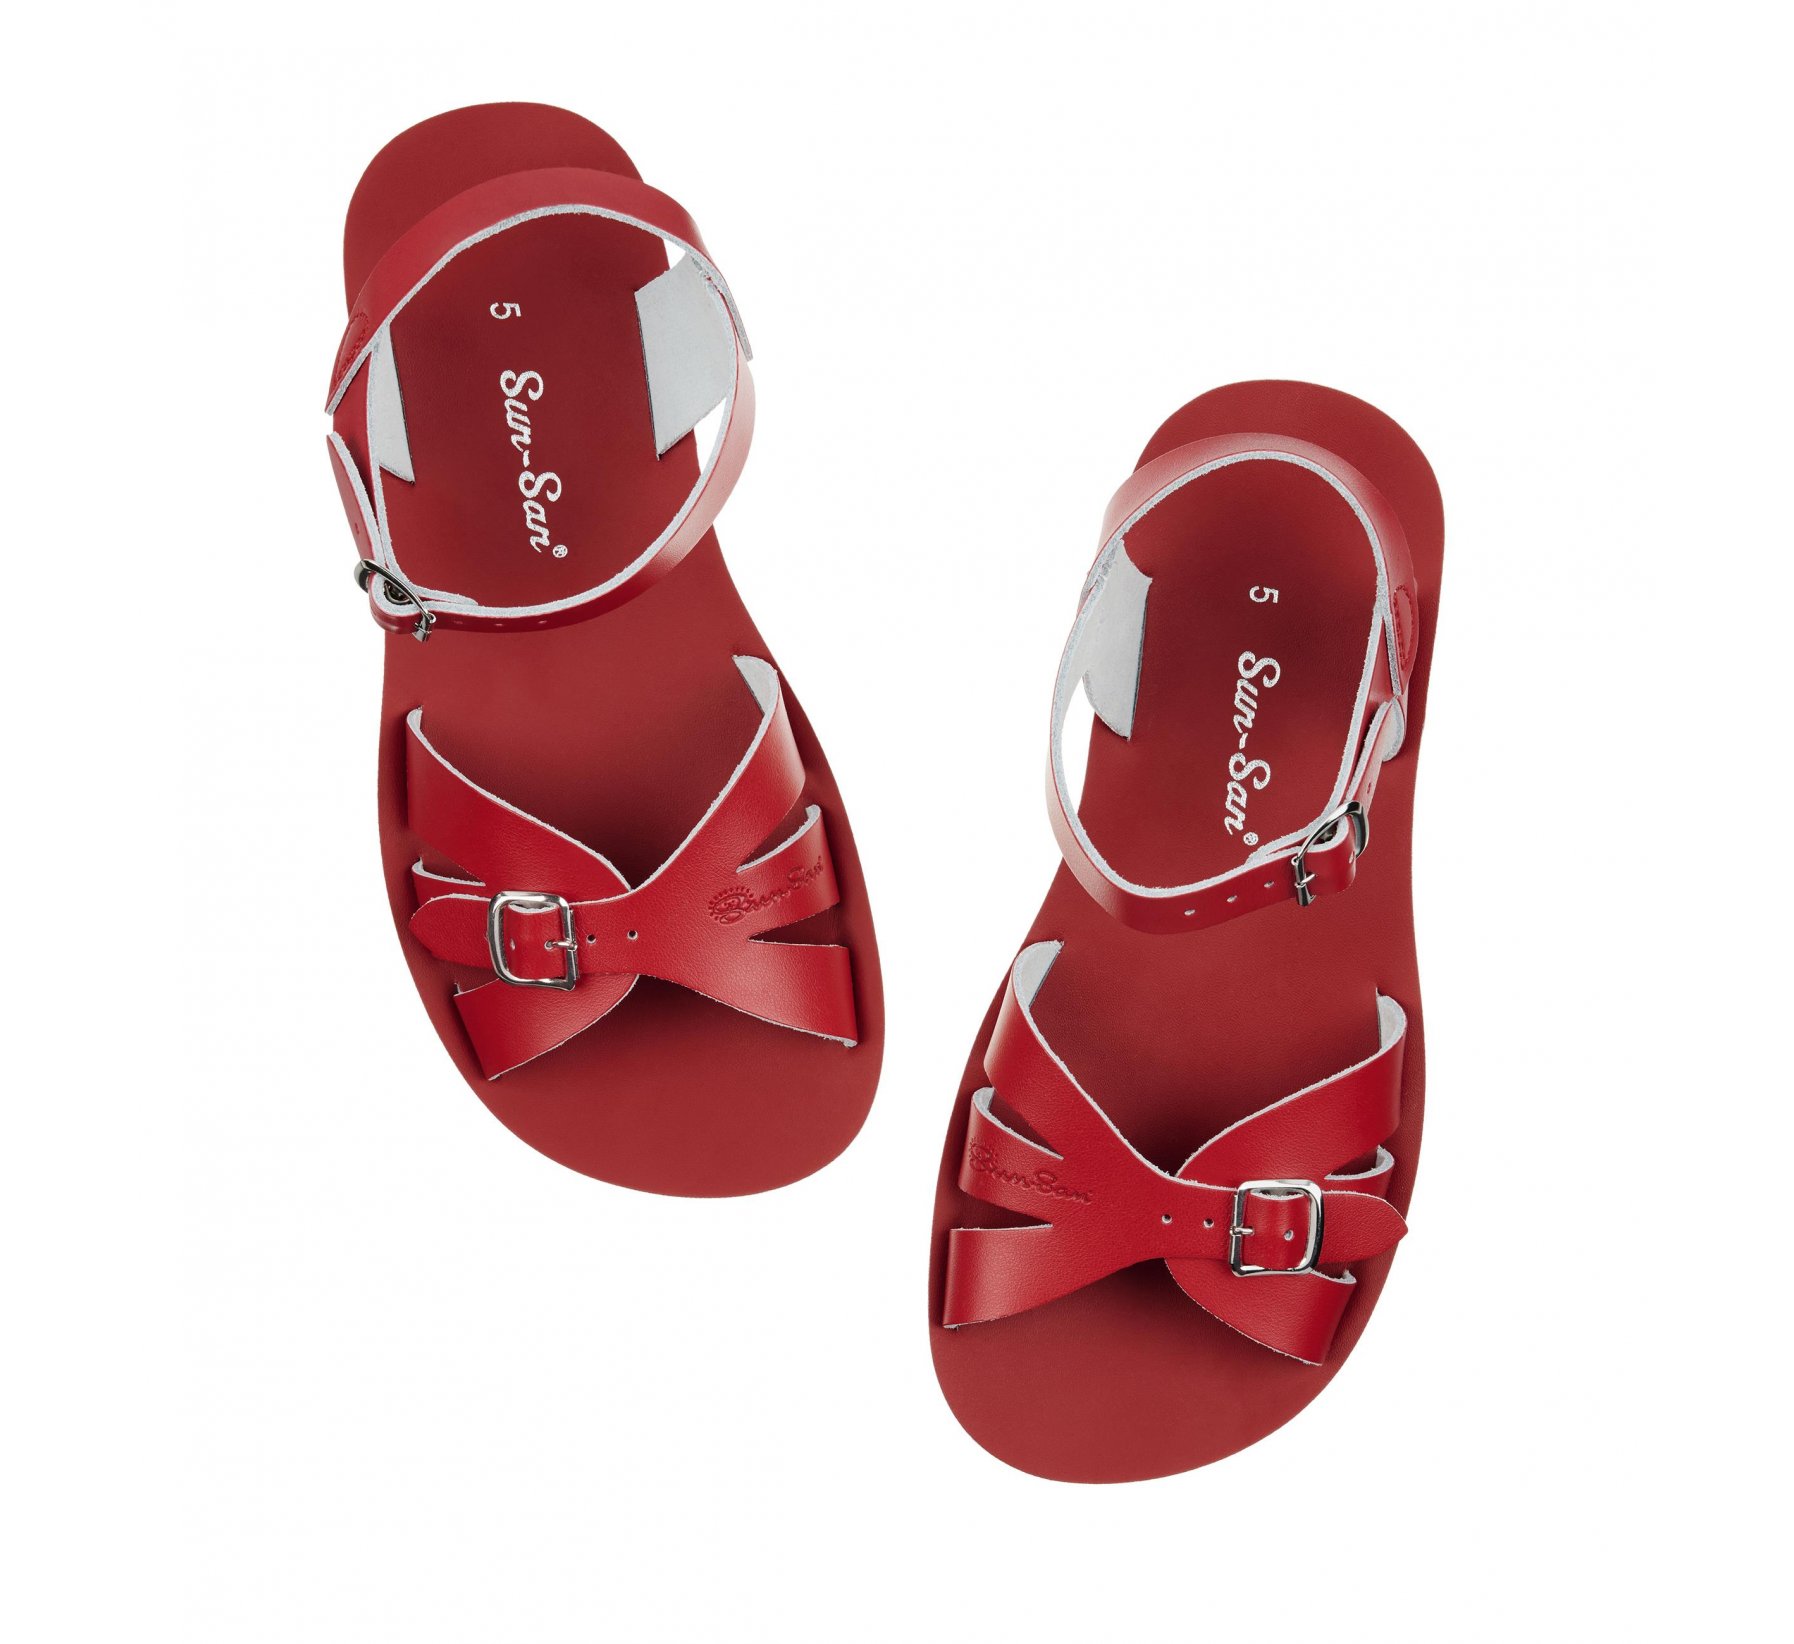 Boardwalk Red Sandal - Salt Water Sandals